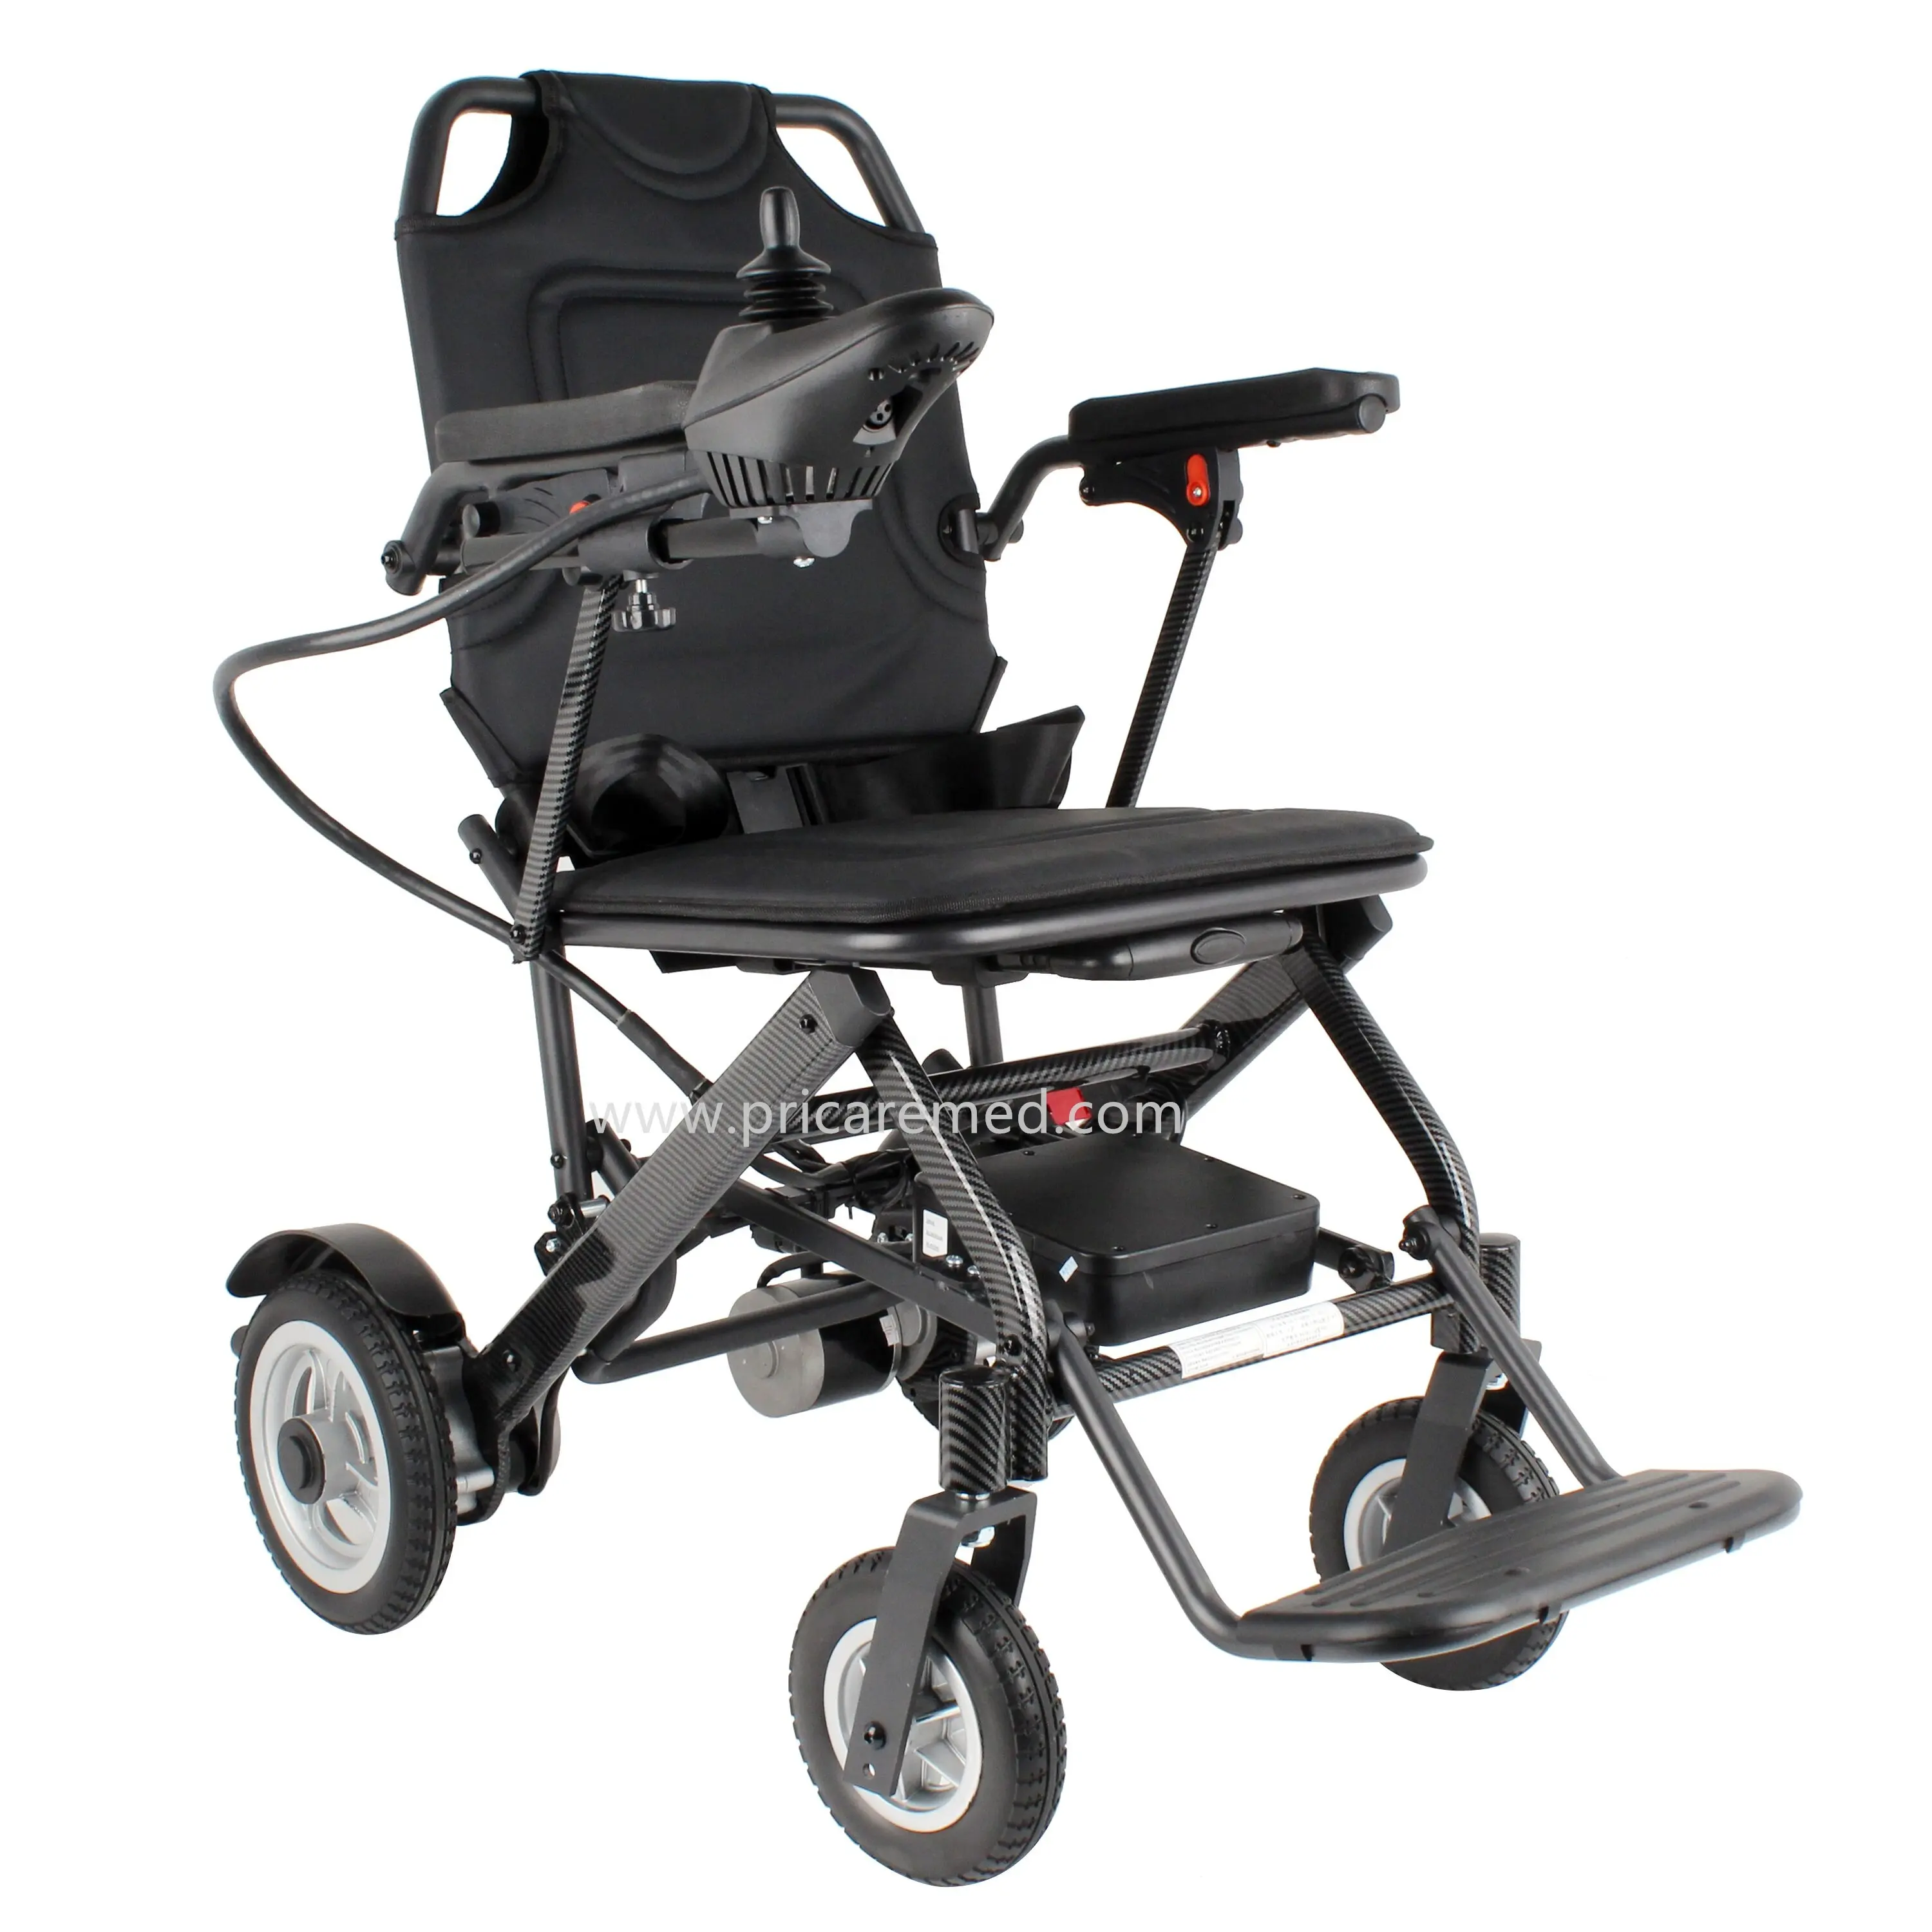 Automatic travel foldable electric wheelchair lightweight silla de ruedas de fibra de carbono with lithium battery